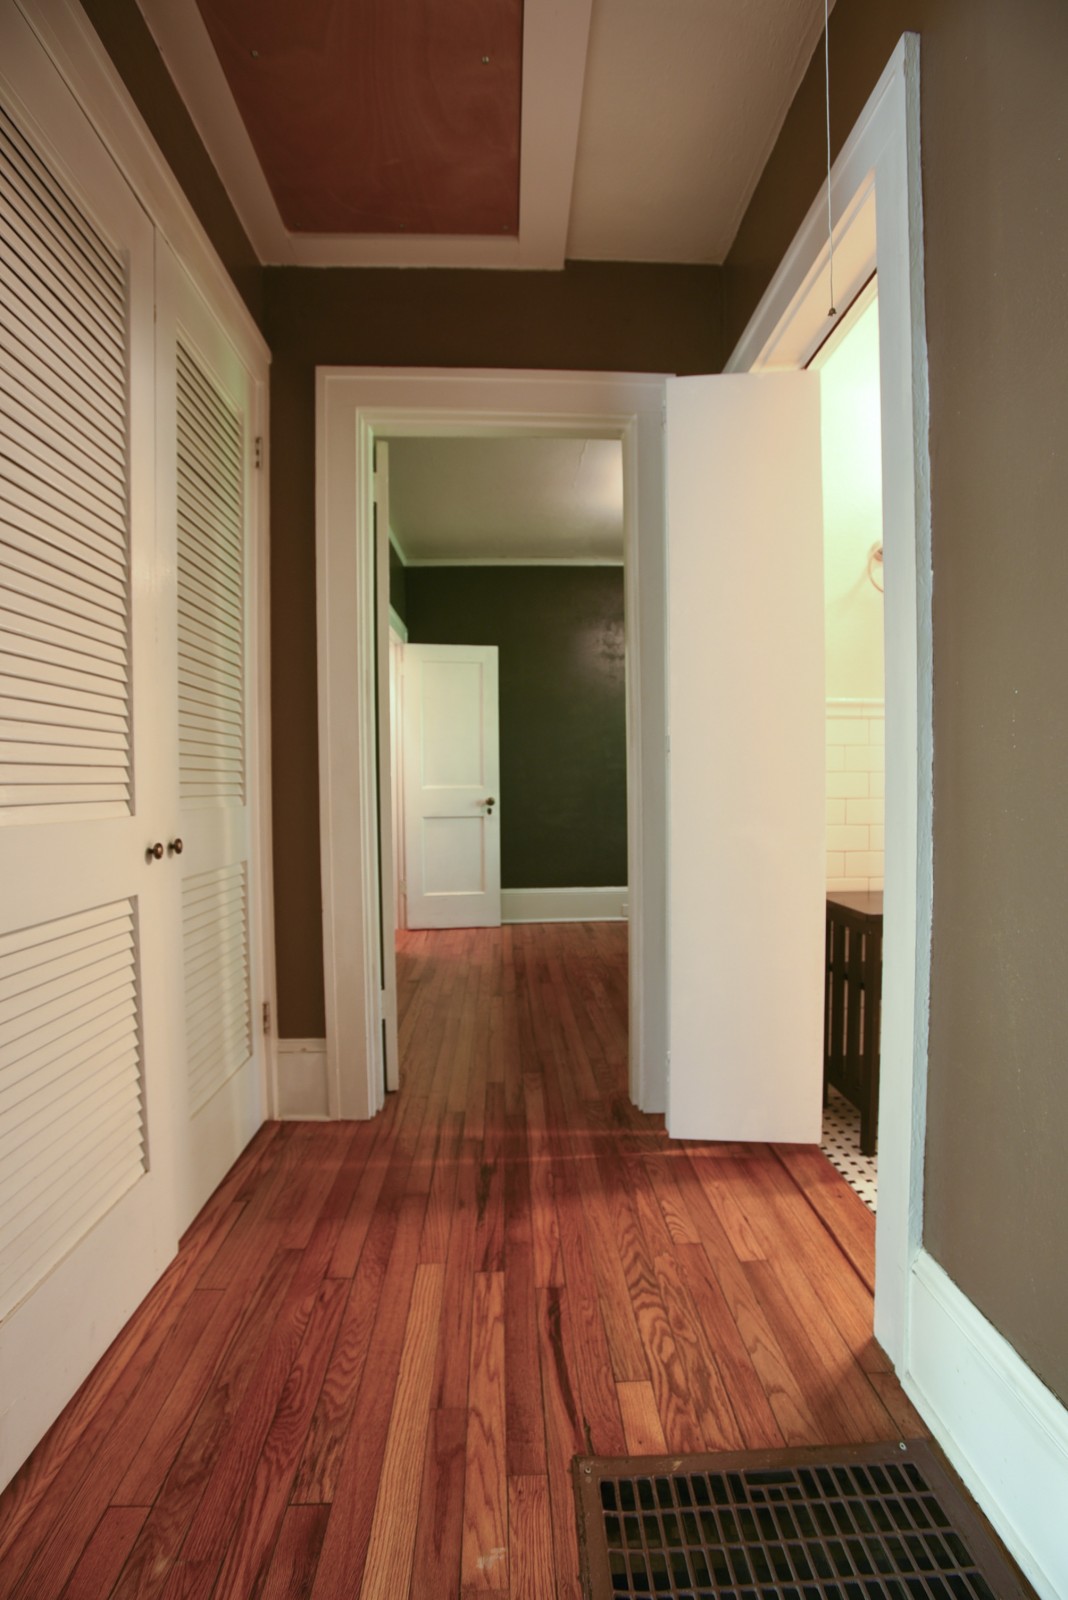 Hallway view